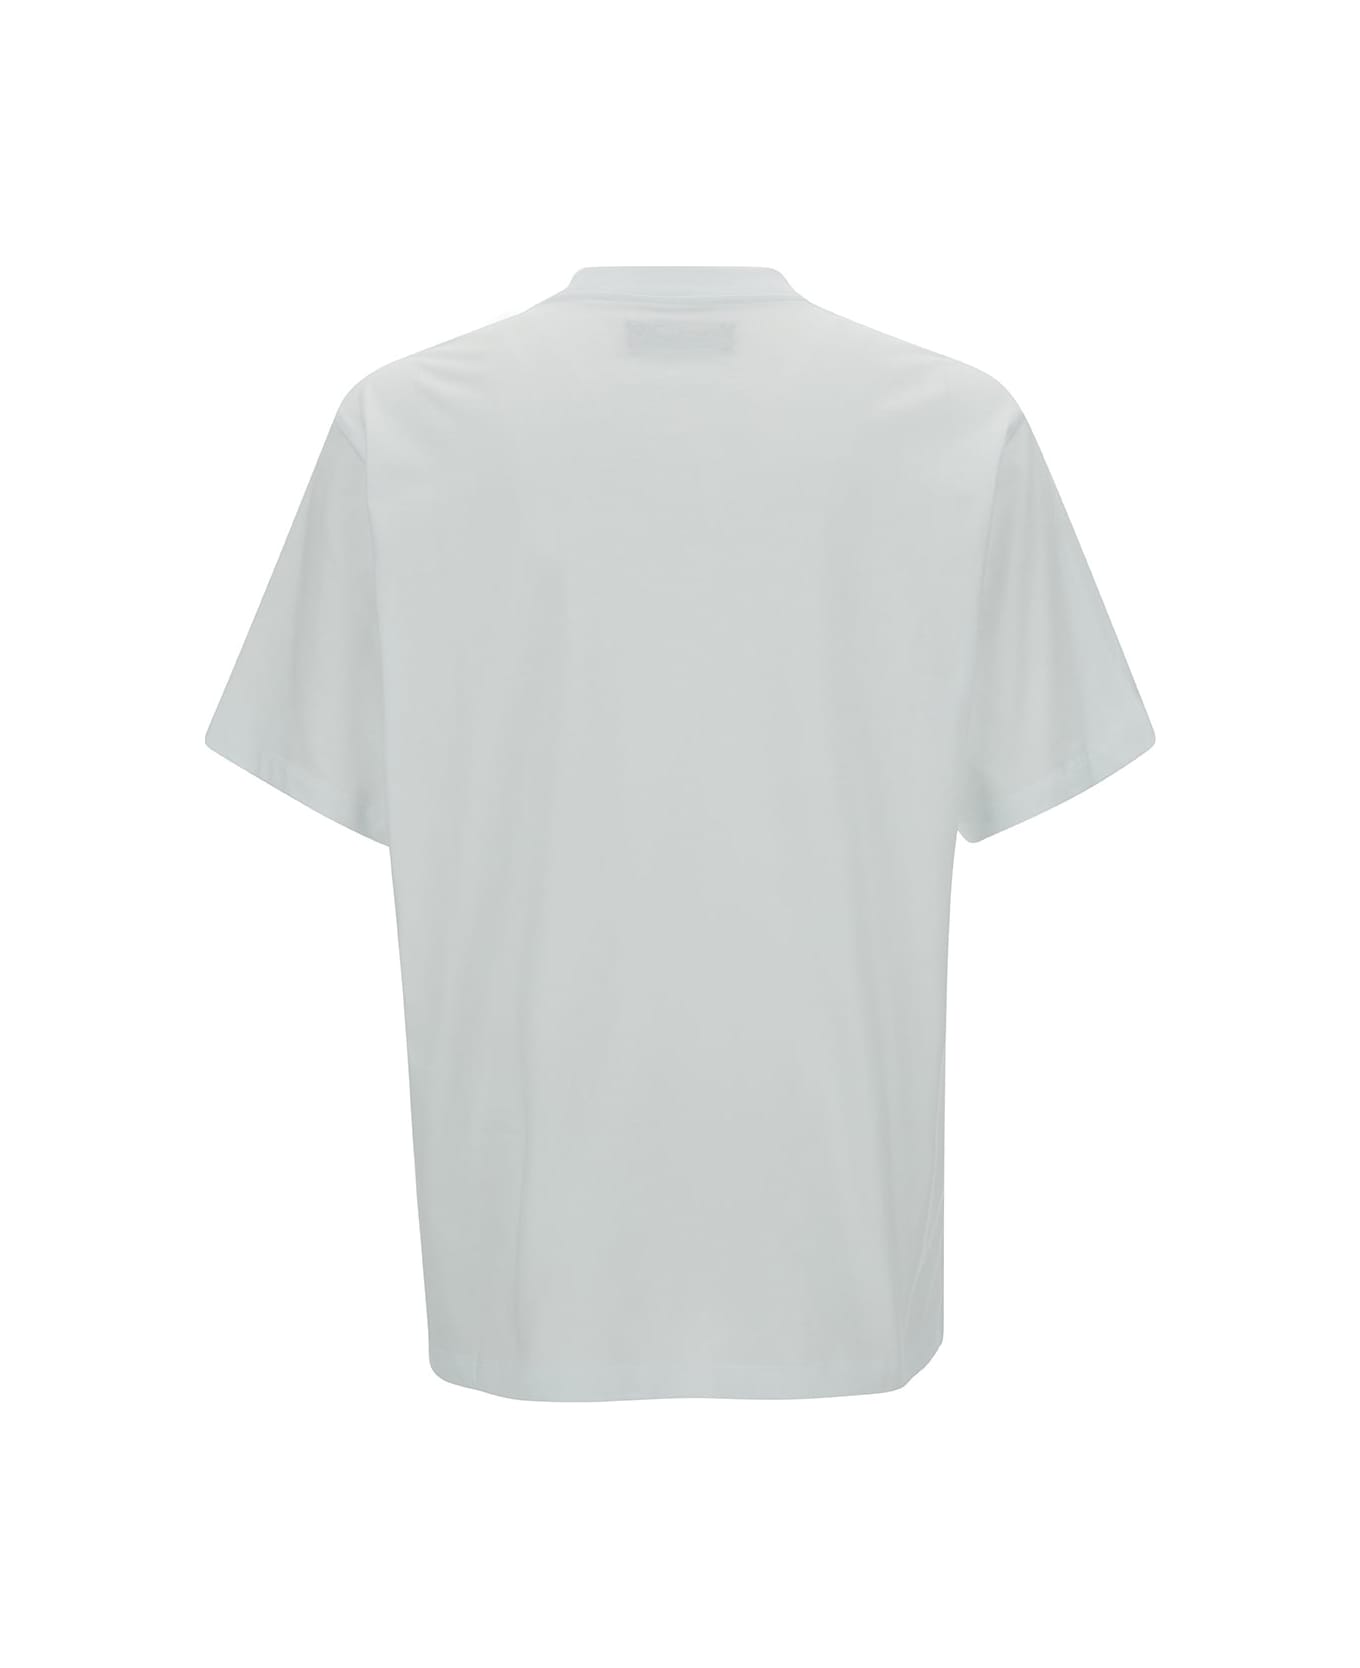 AMIRI White T-shirt With Contrasting Logo Print In Cotton Man - White